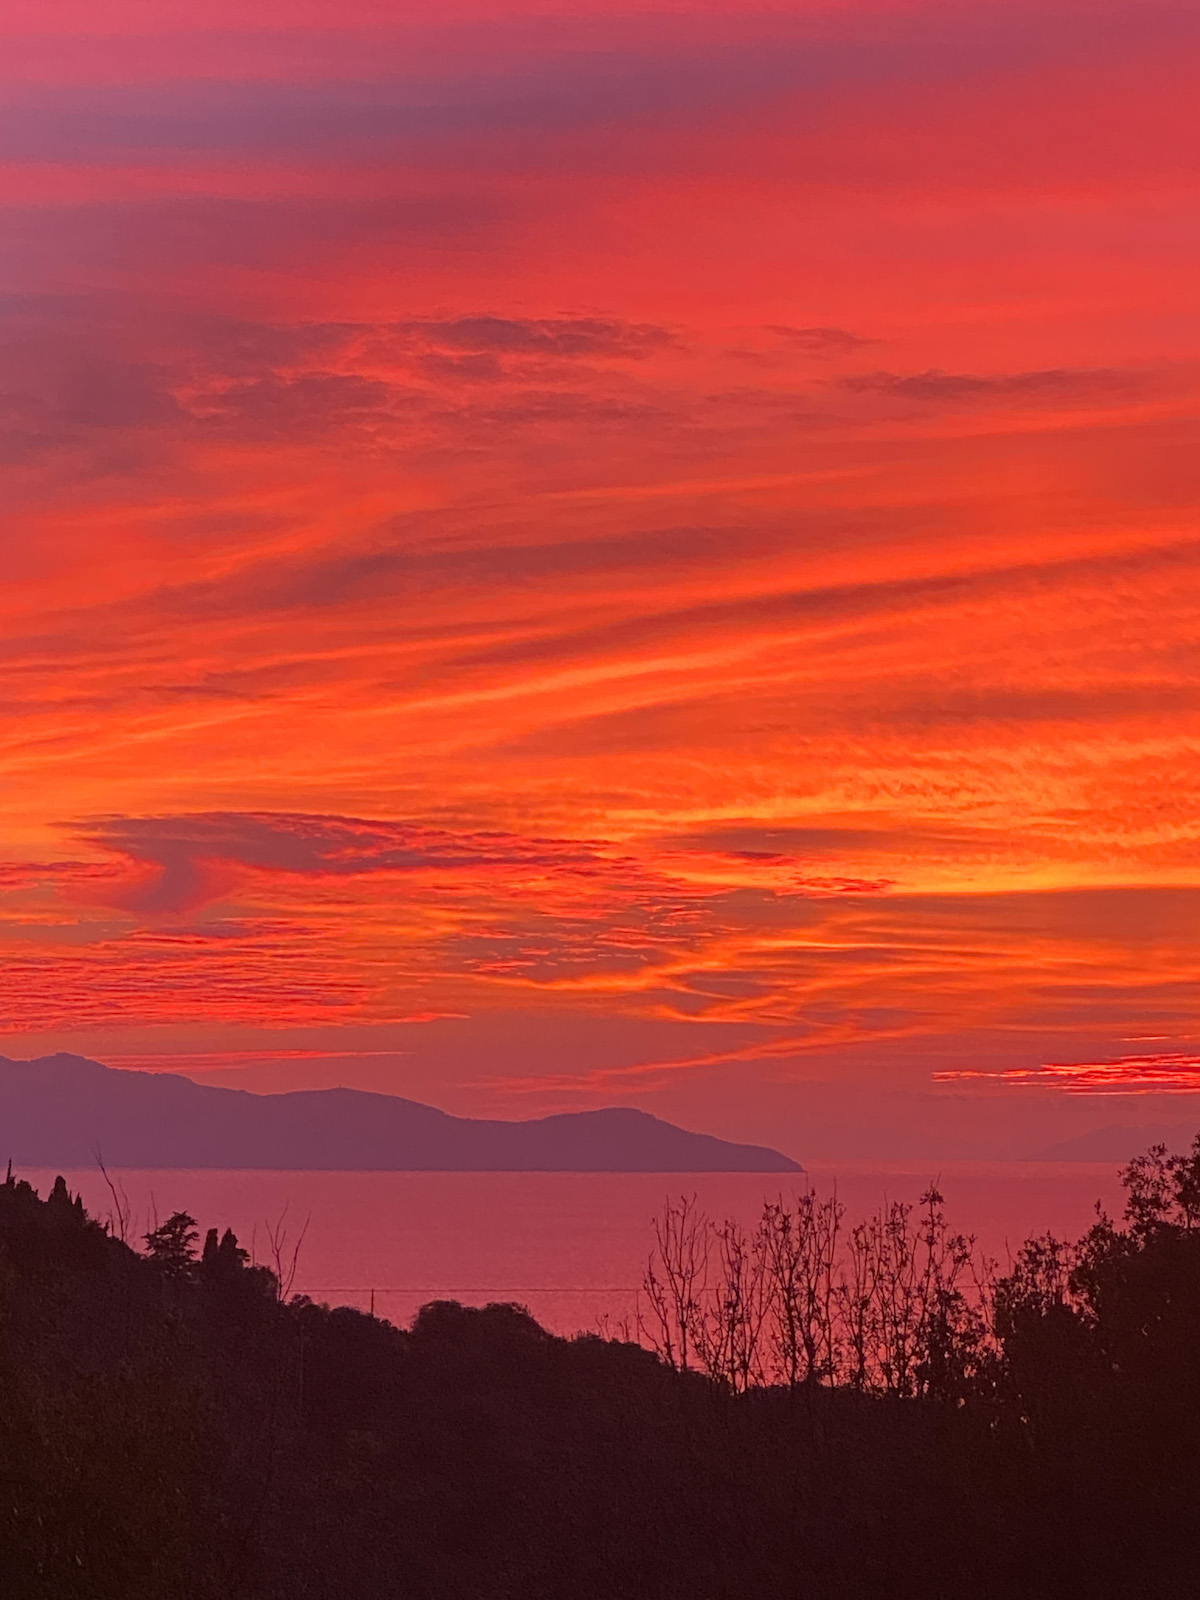 Sunset over Giglio | OurItalianTable.com